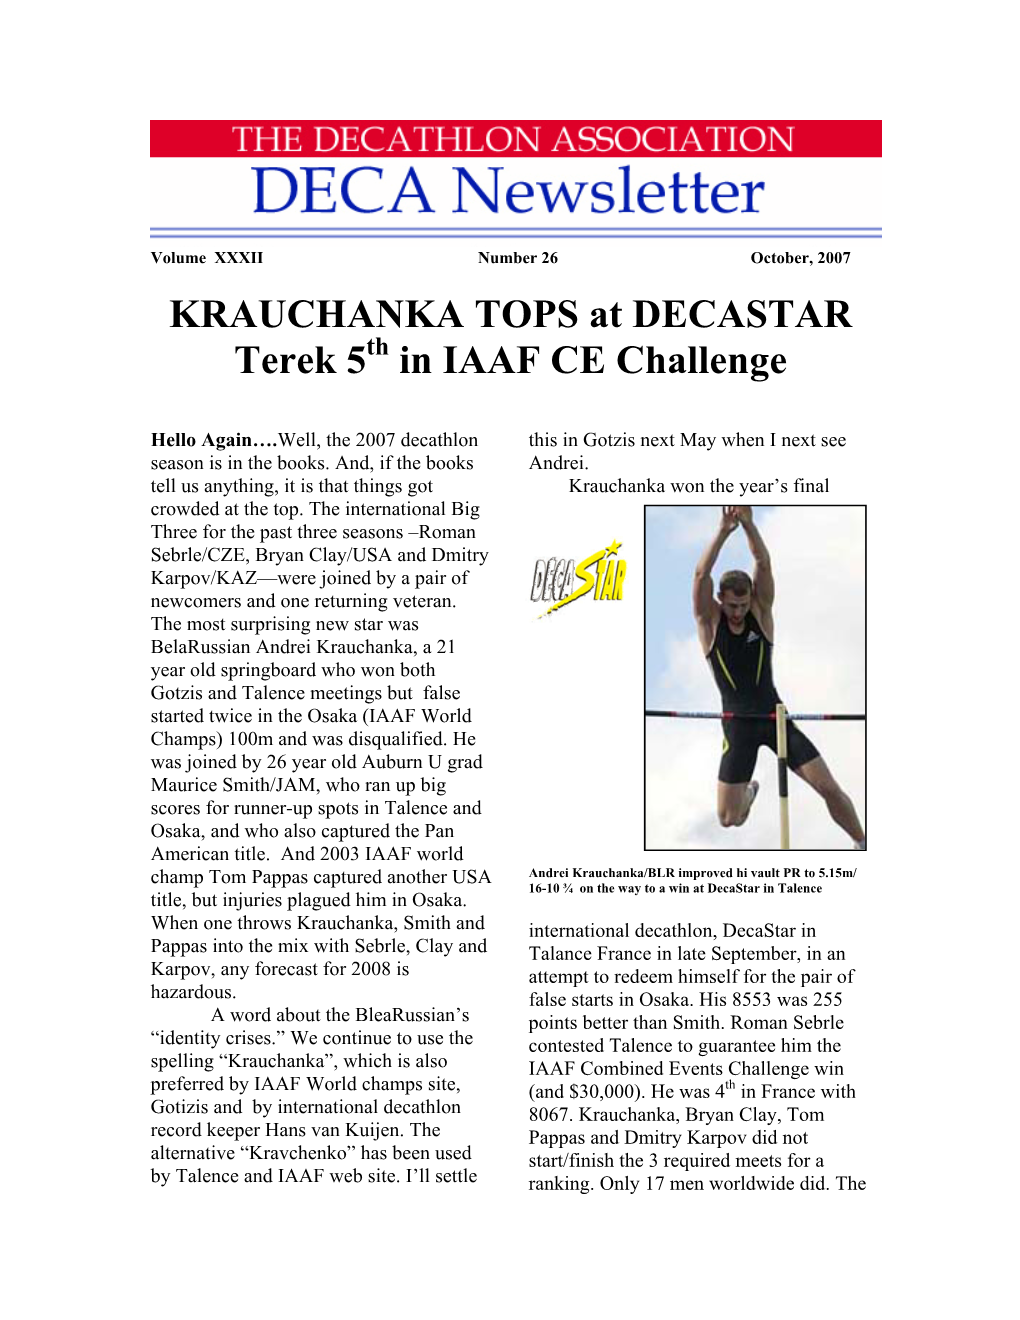 KRAUCHANKA TOPS at DECASTAR Terek 5 in IAAF CE Challenge